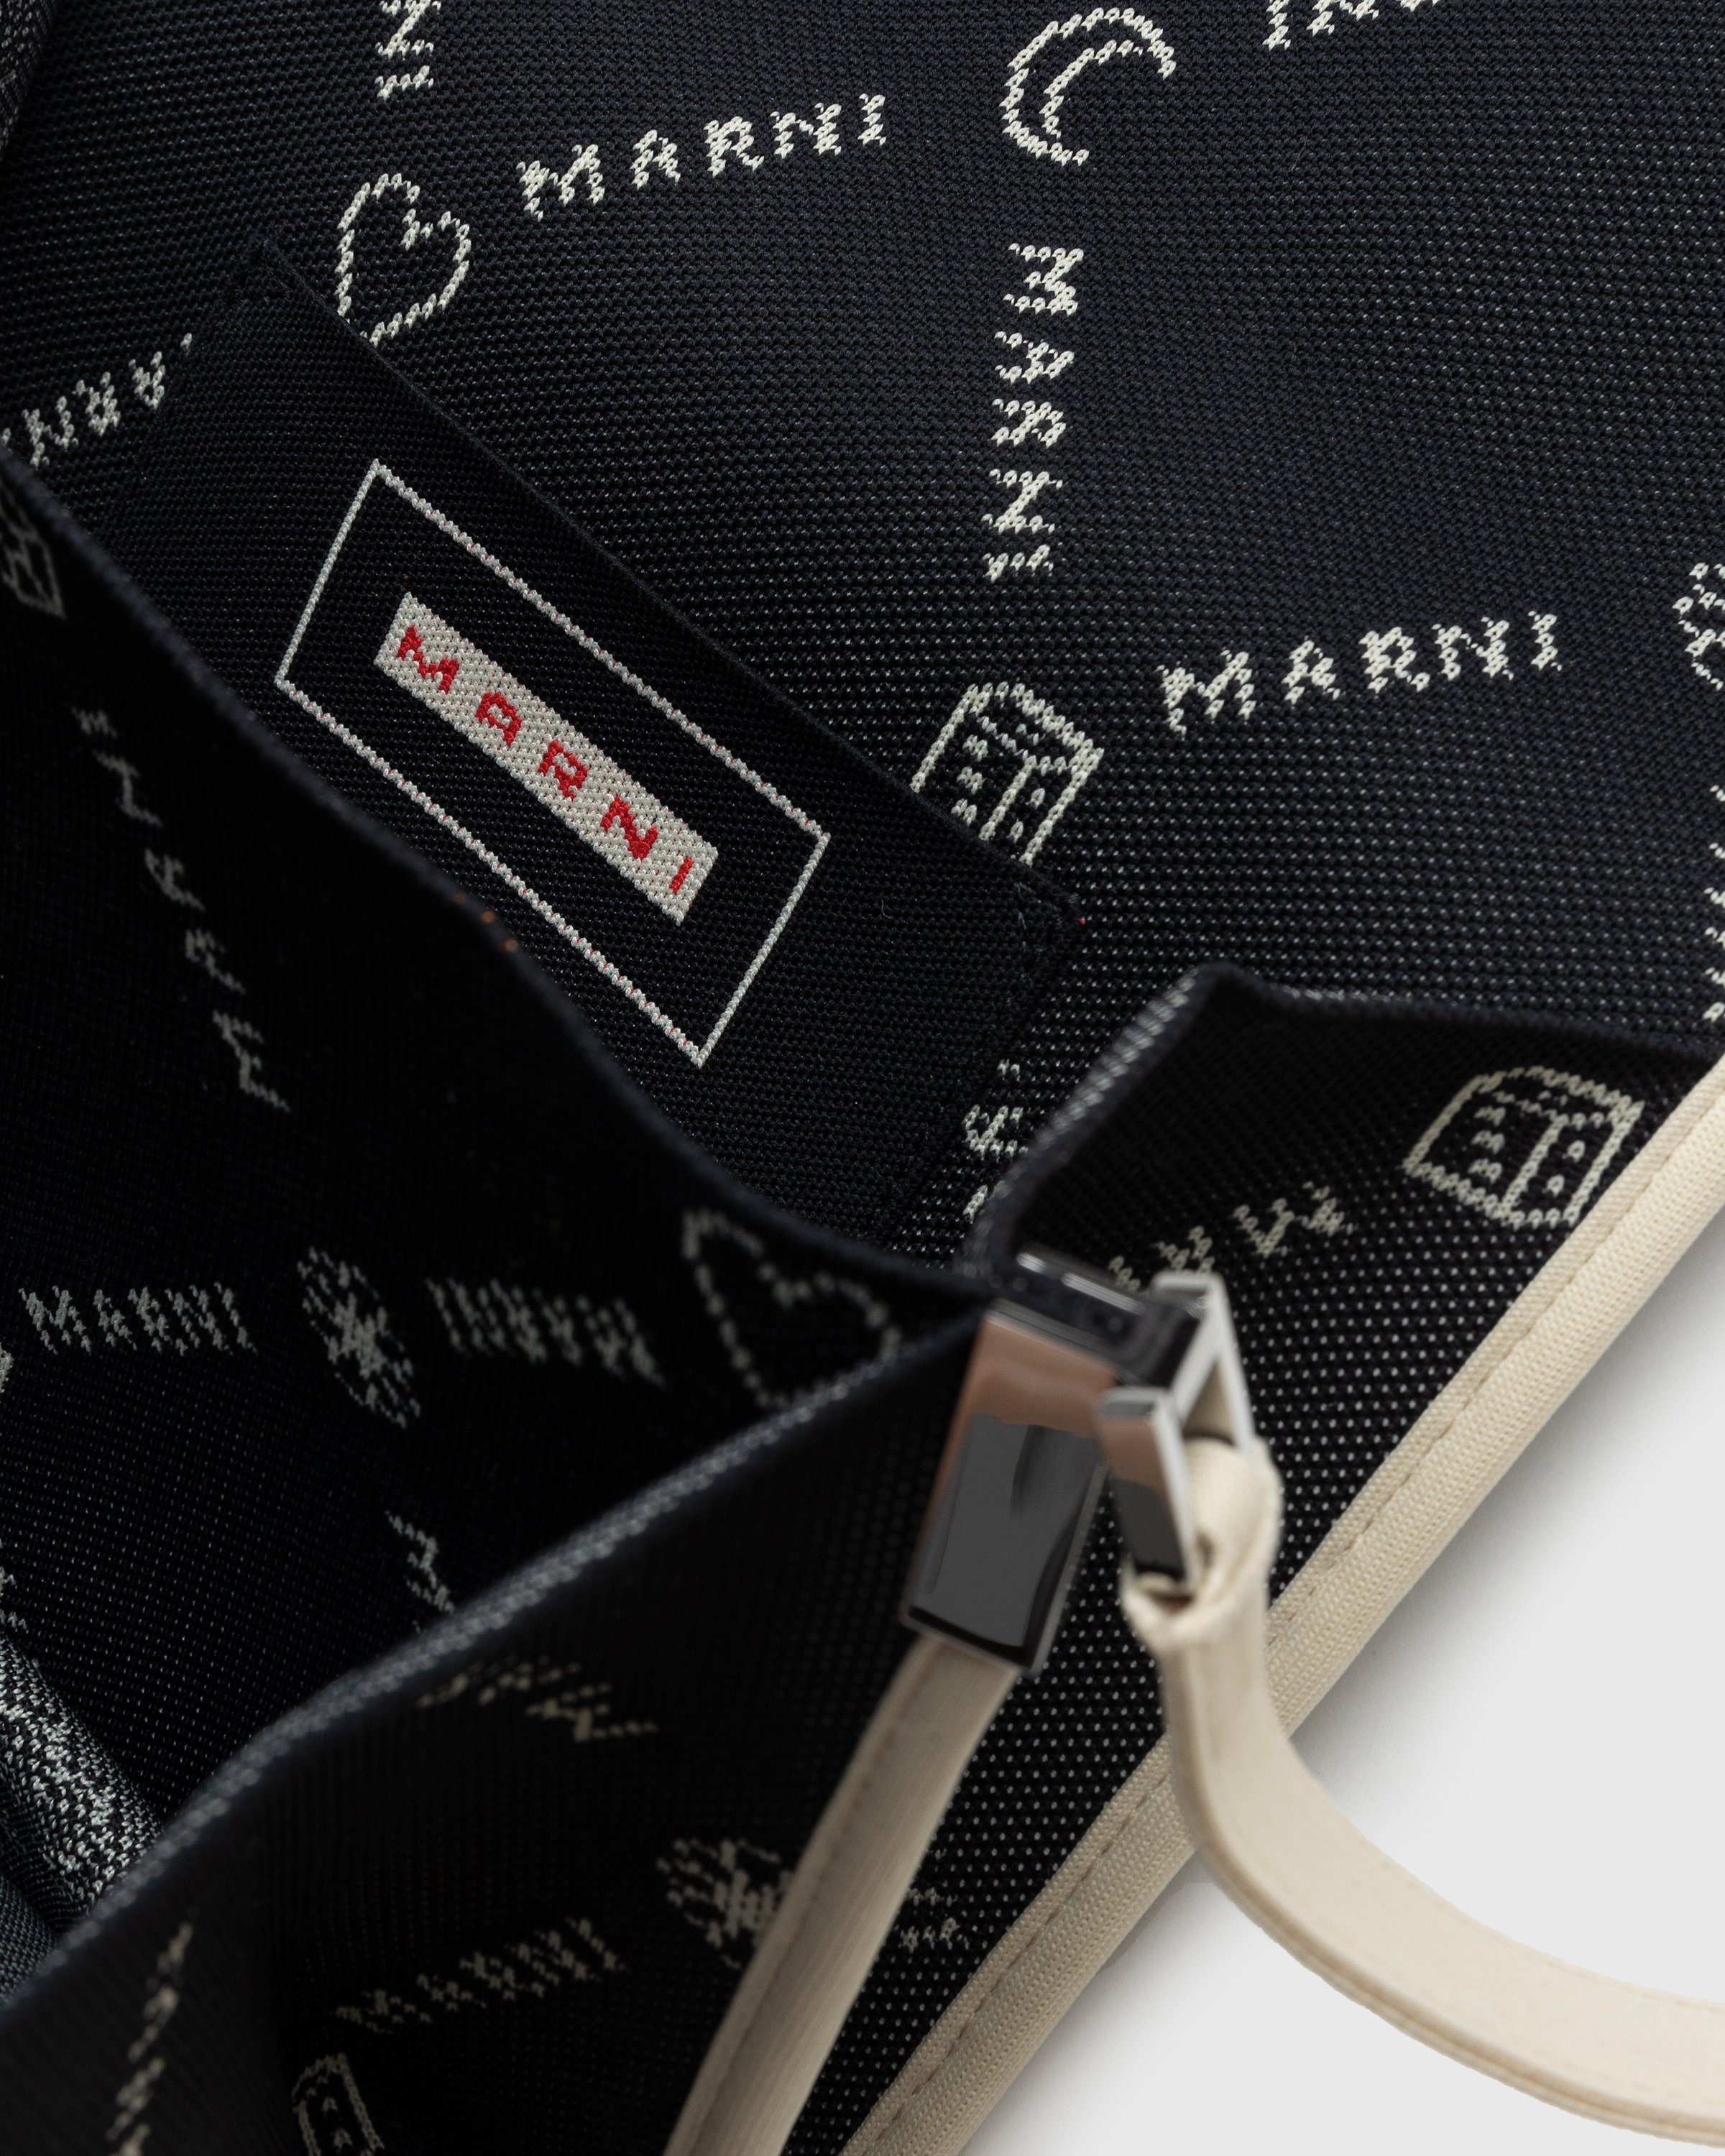 Marni – Trunk Soft Bag Black